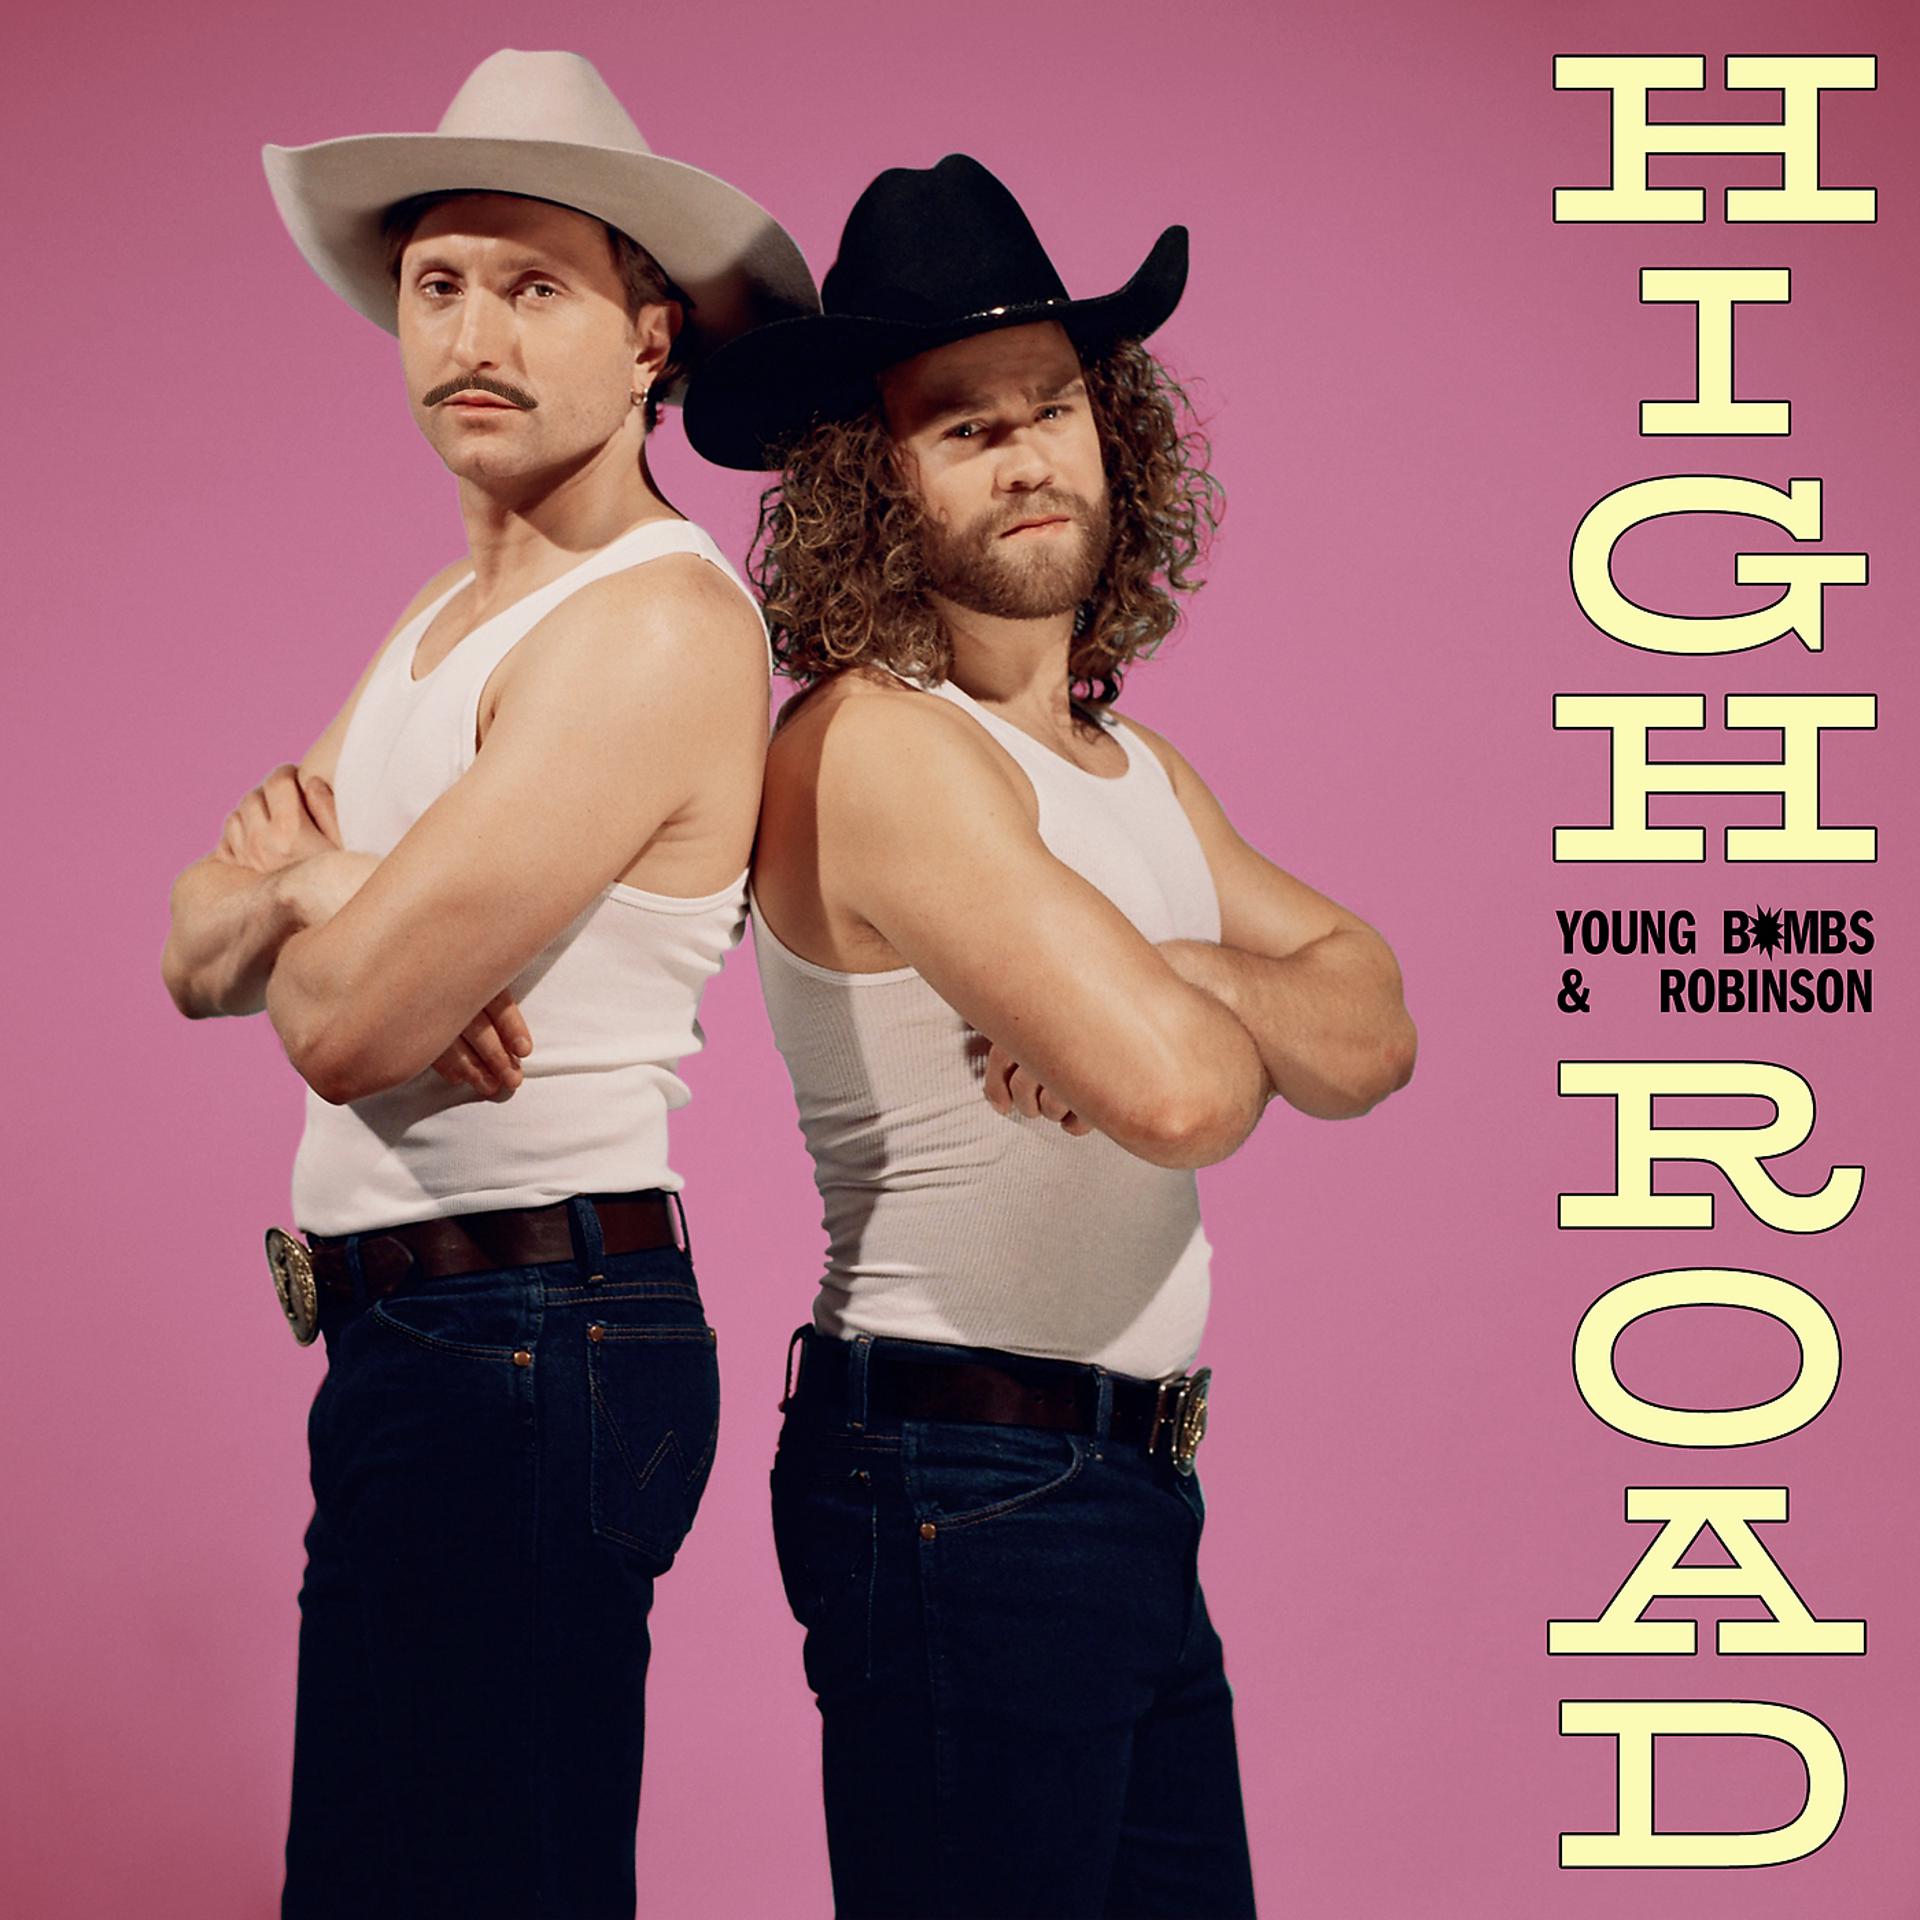 Постер альбома High Road